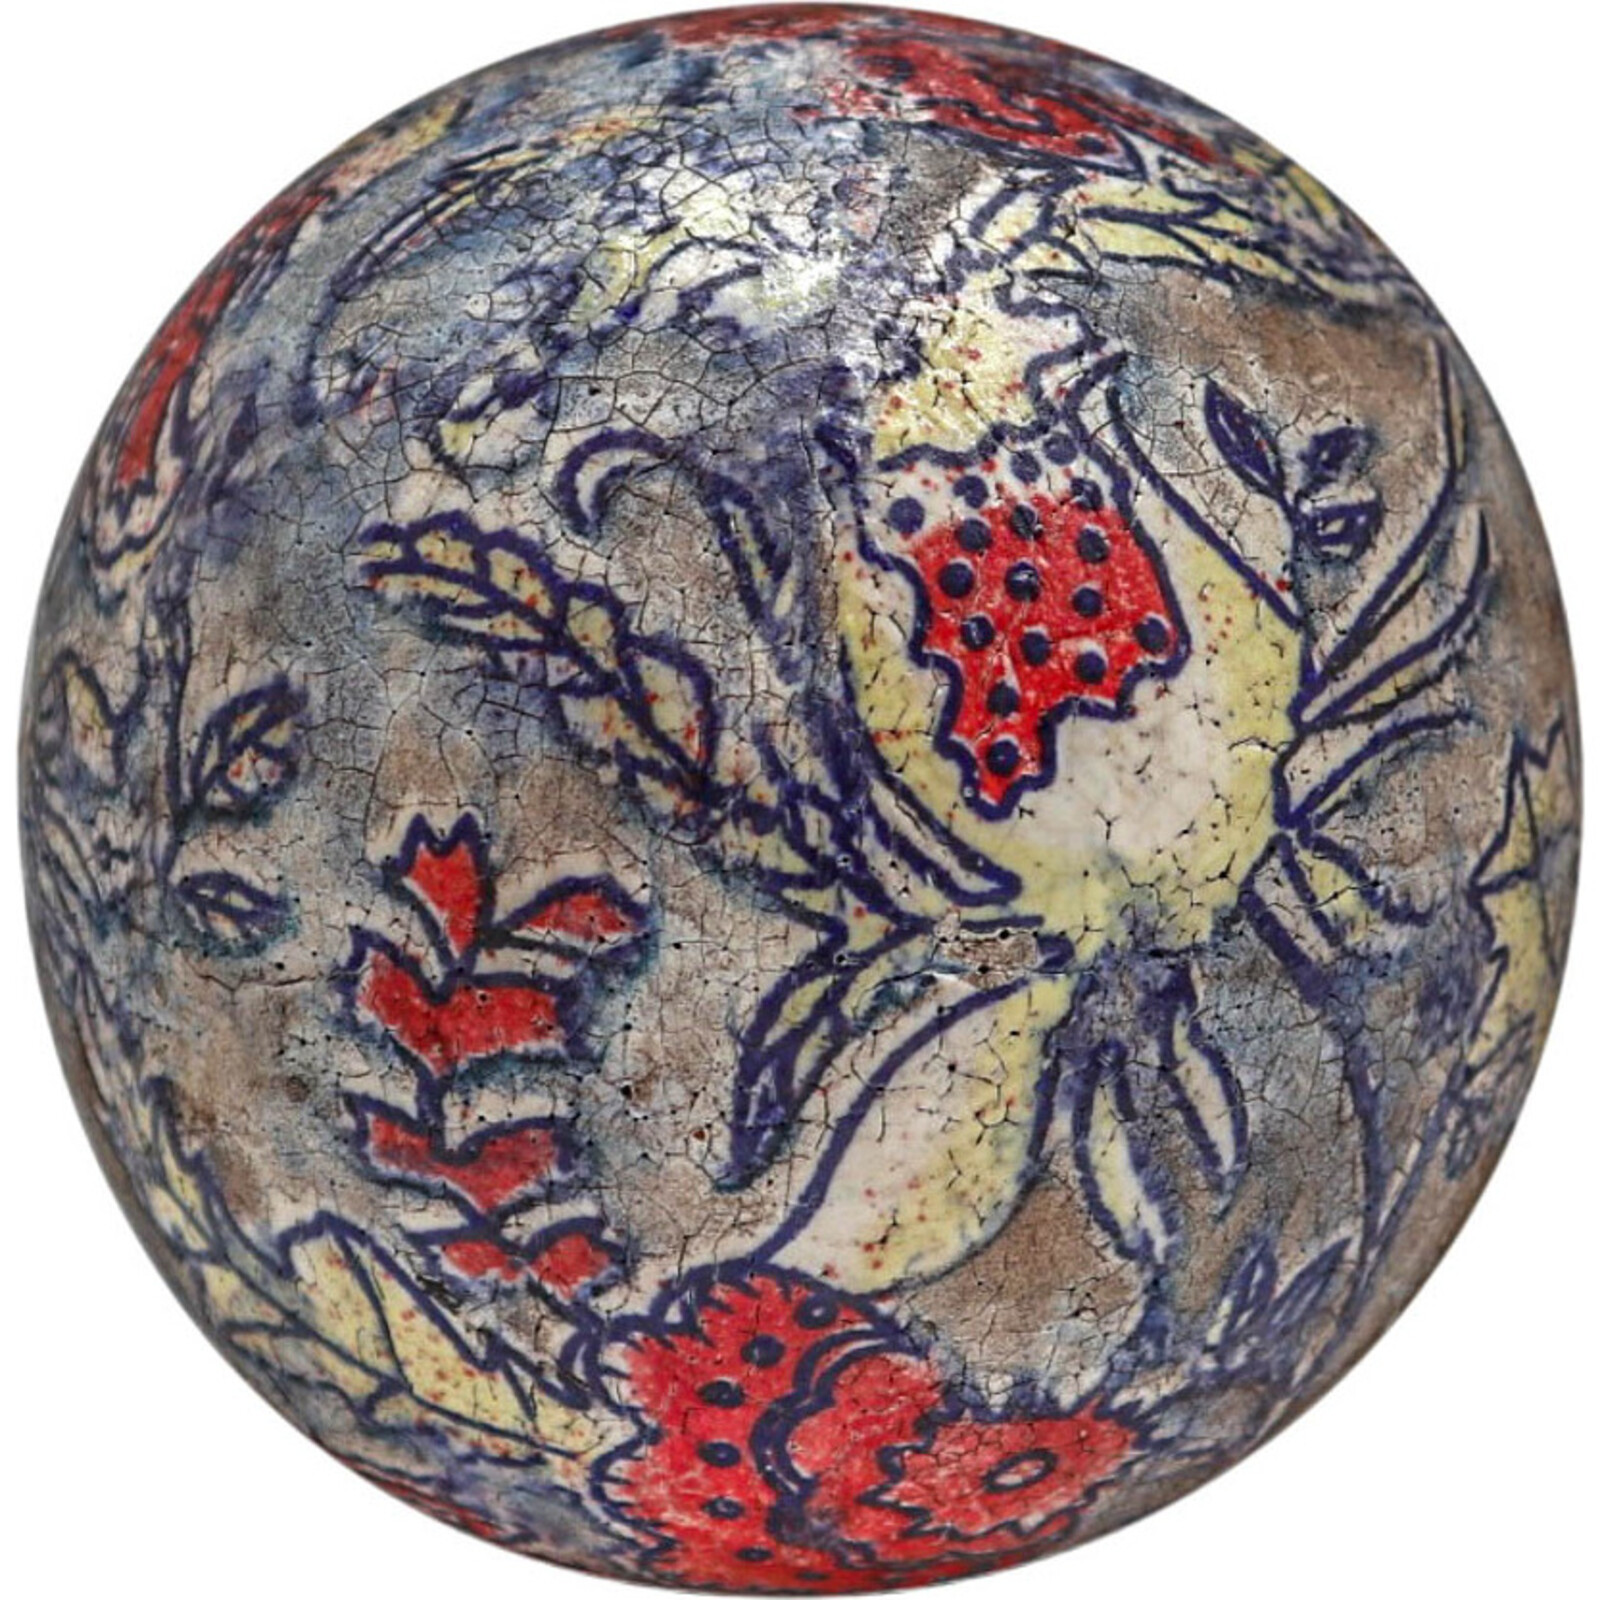 Decorative Ball Floral Textured